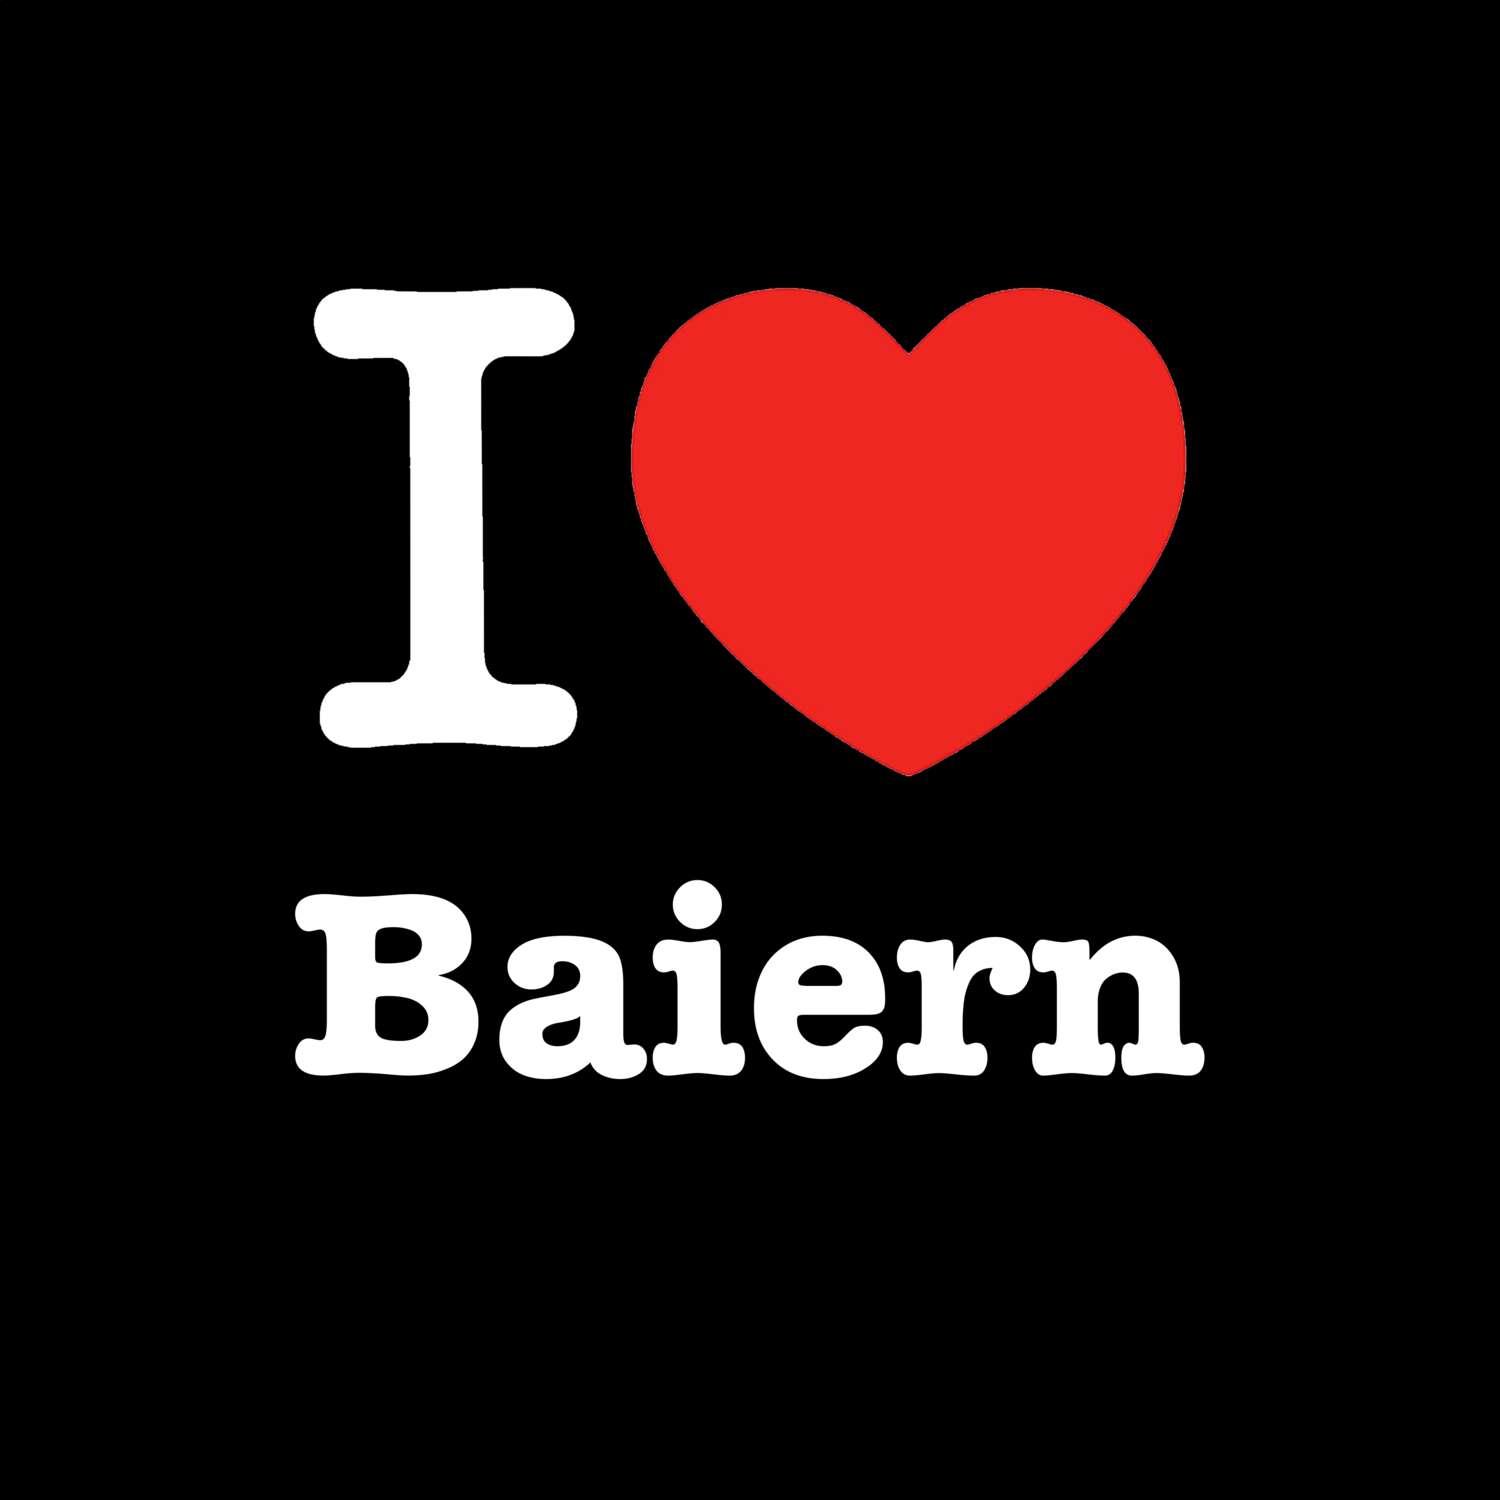 Baiern T-Shirt »I love«